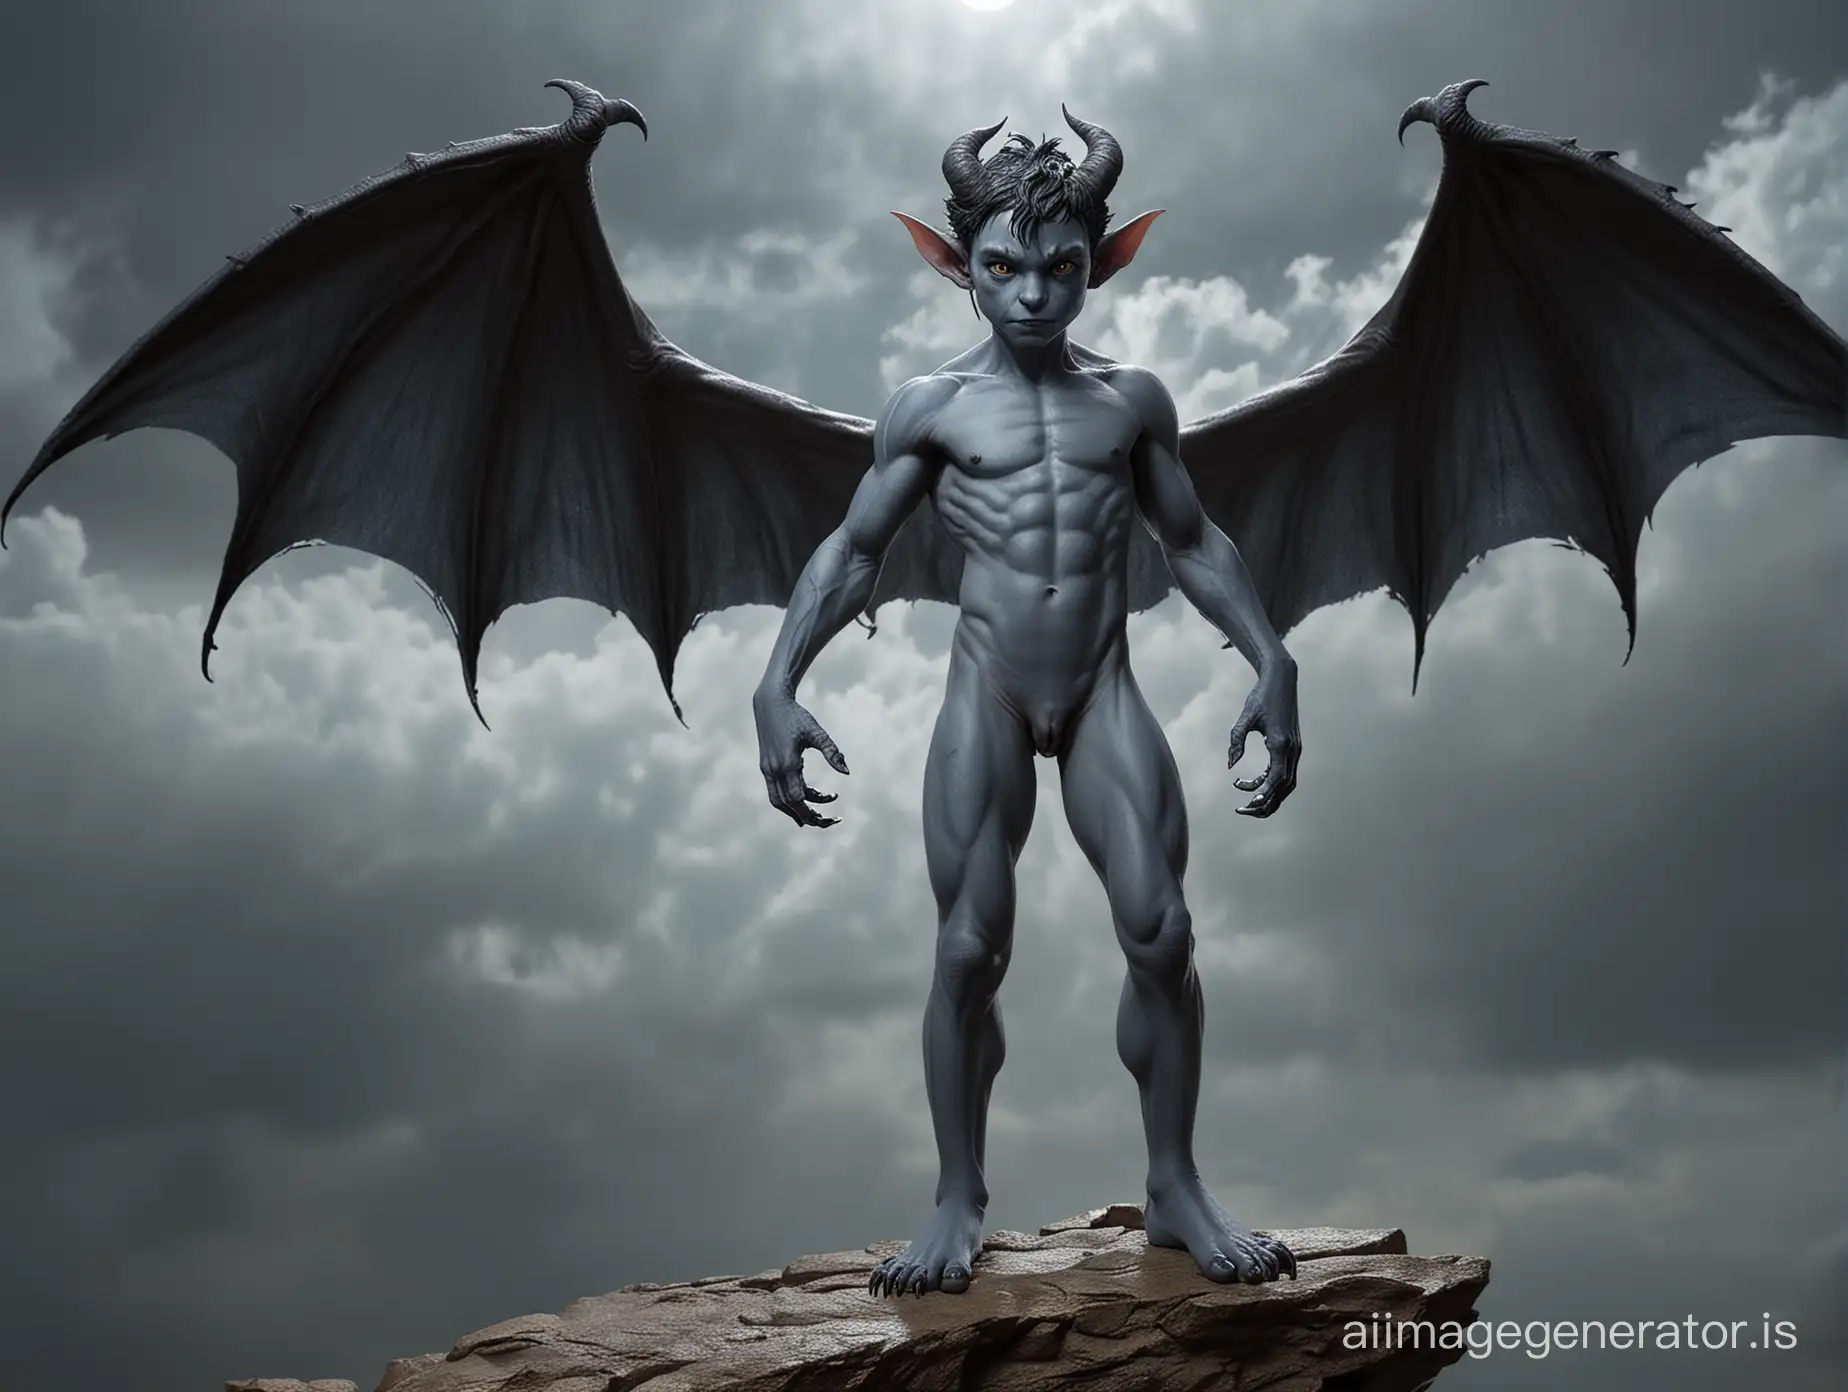 Nude-Demonboy-with-BatLike-Wings-and-Horns-Standing-on-Rock-in-Dark-Cloudy-Night